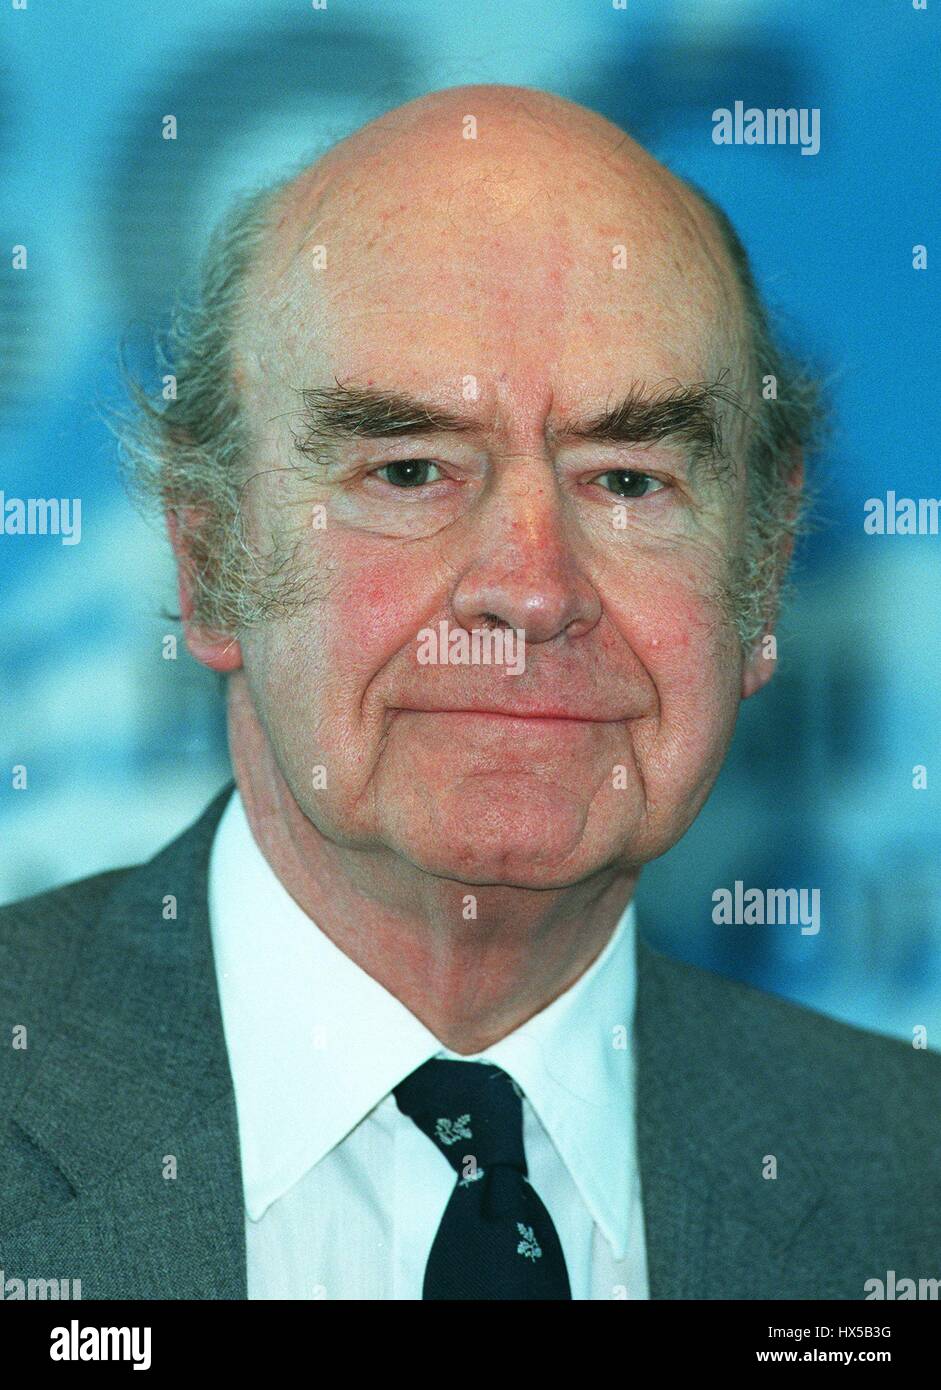 SIR ROBIN IBBS CHAIRMAN 'LLOYDS BANK PLC' 13 June 1995 Stock Photo